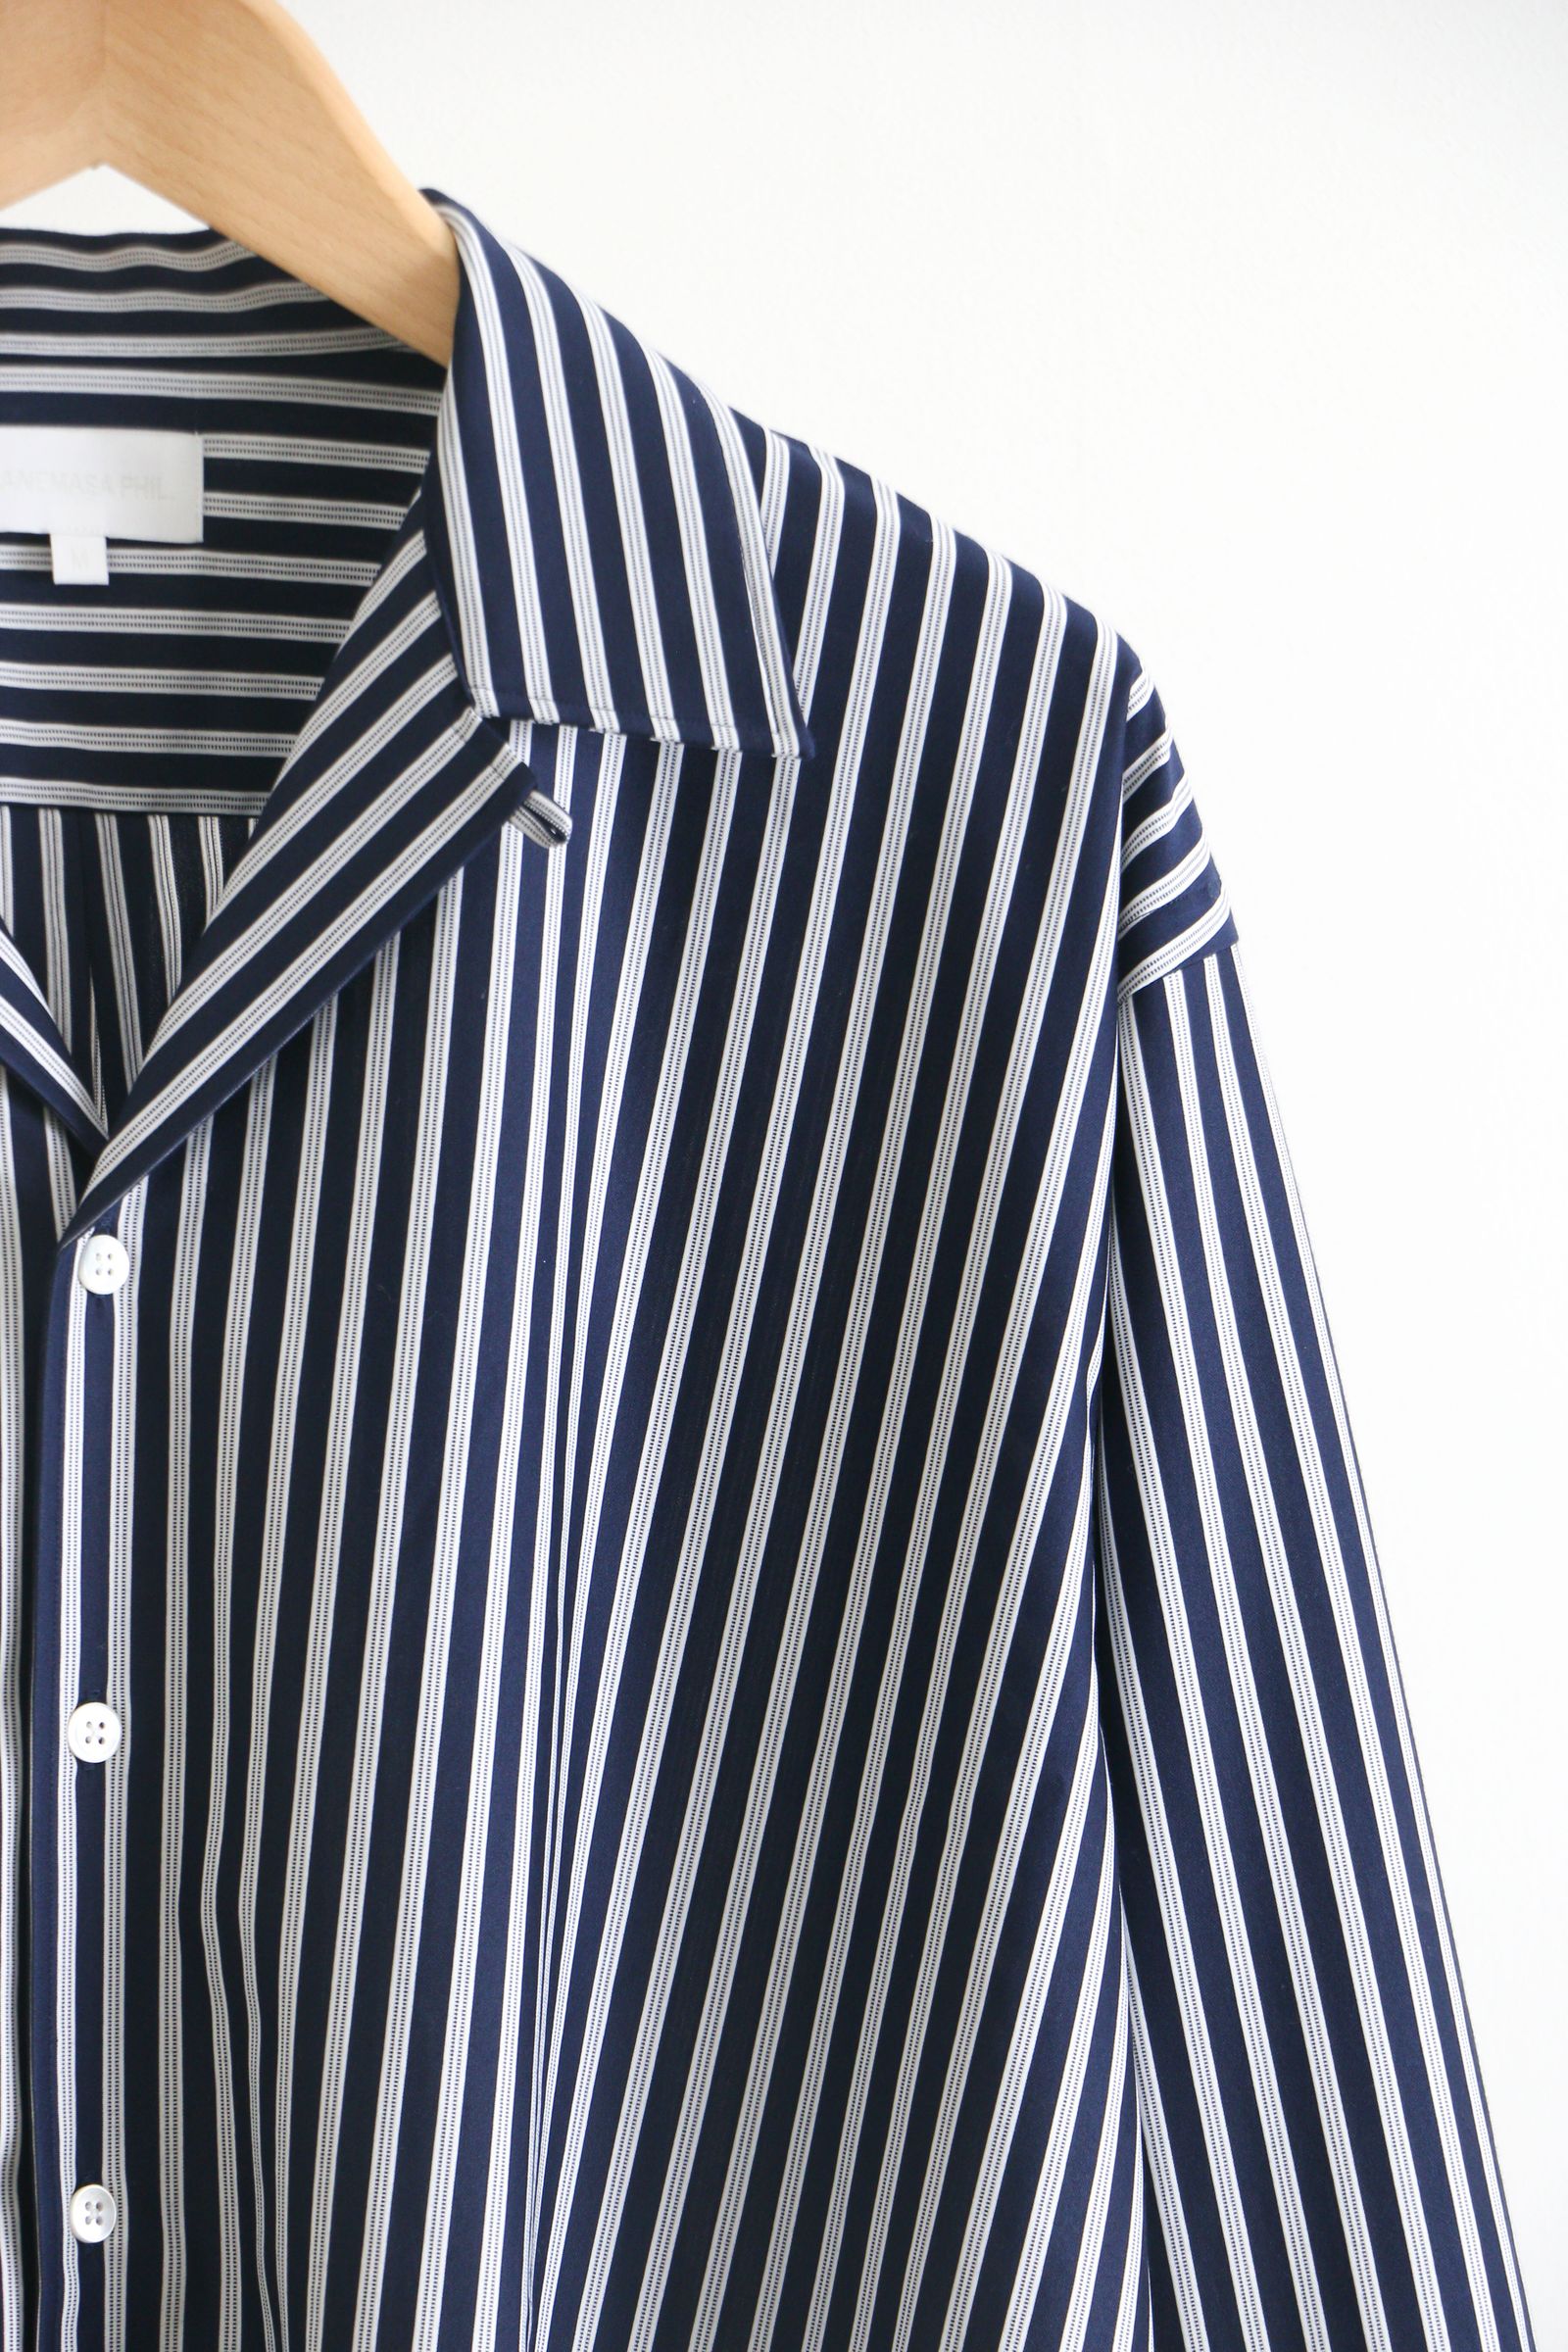 46G Atmosphere Stripe Open Collar Shirt NAVY / ストライプシャツ / オープンカラーシャツ/ ネイビー  - M